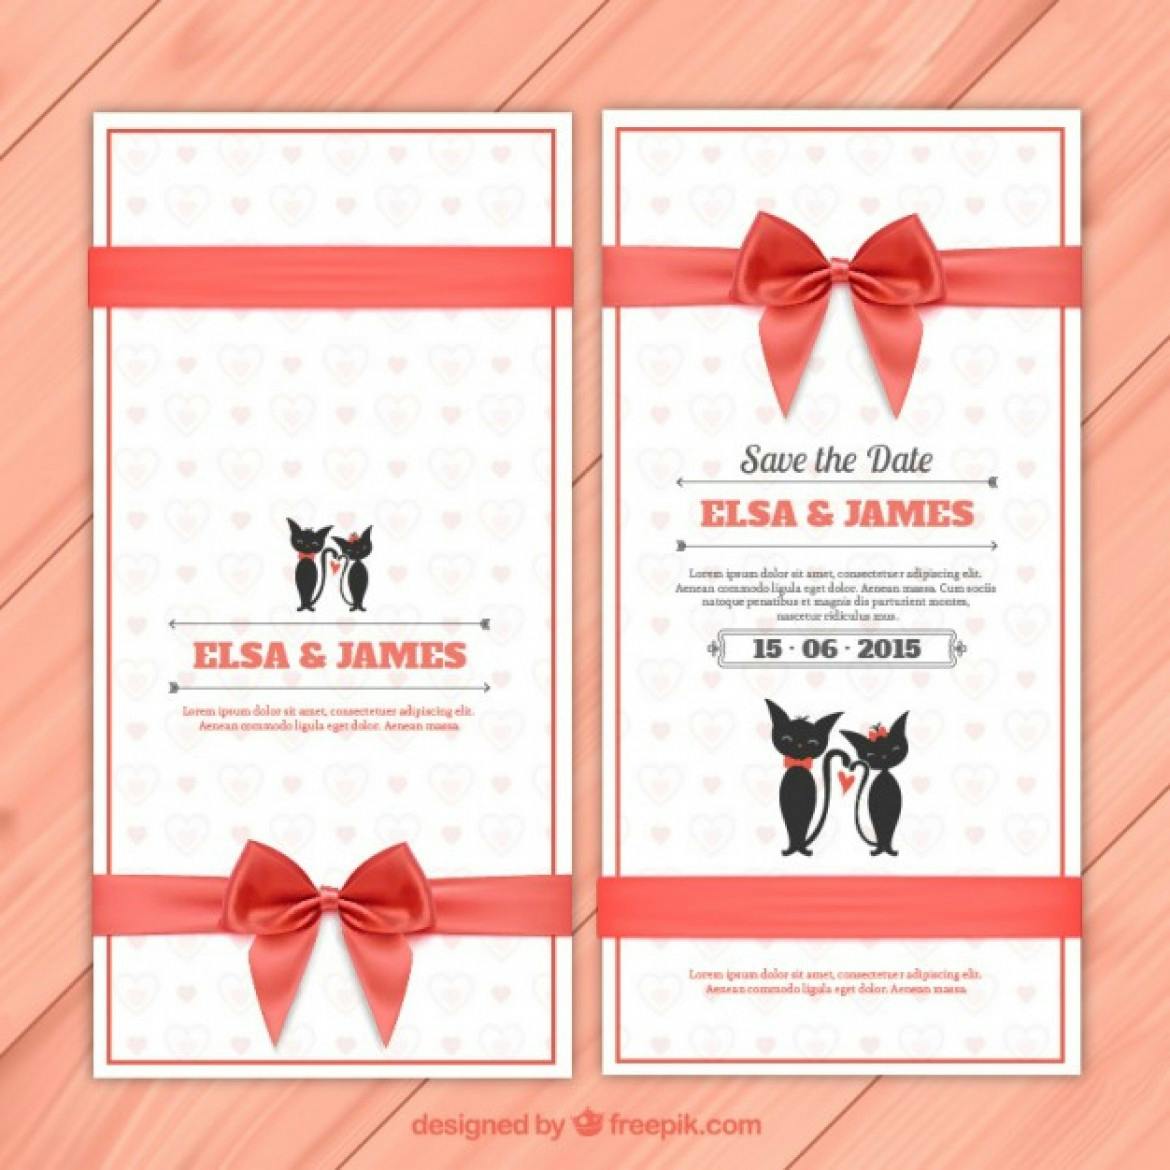 wpid-wedding-invitation-with-cute-cats_23-2147508670-1170x1170